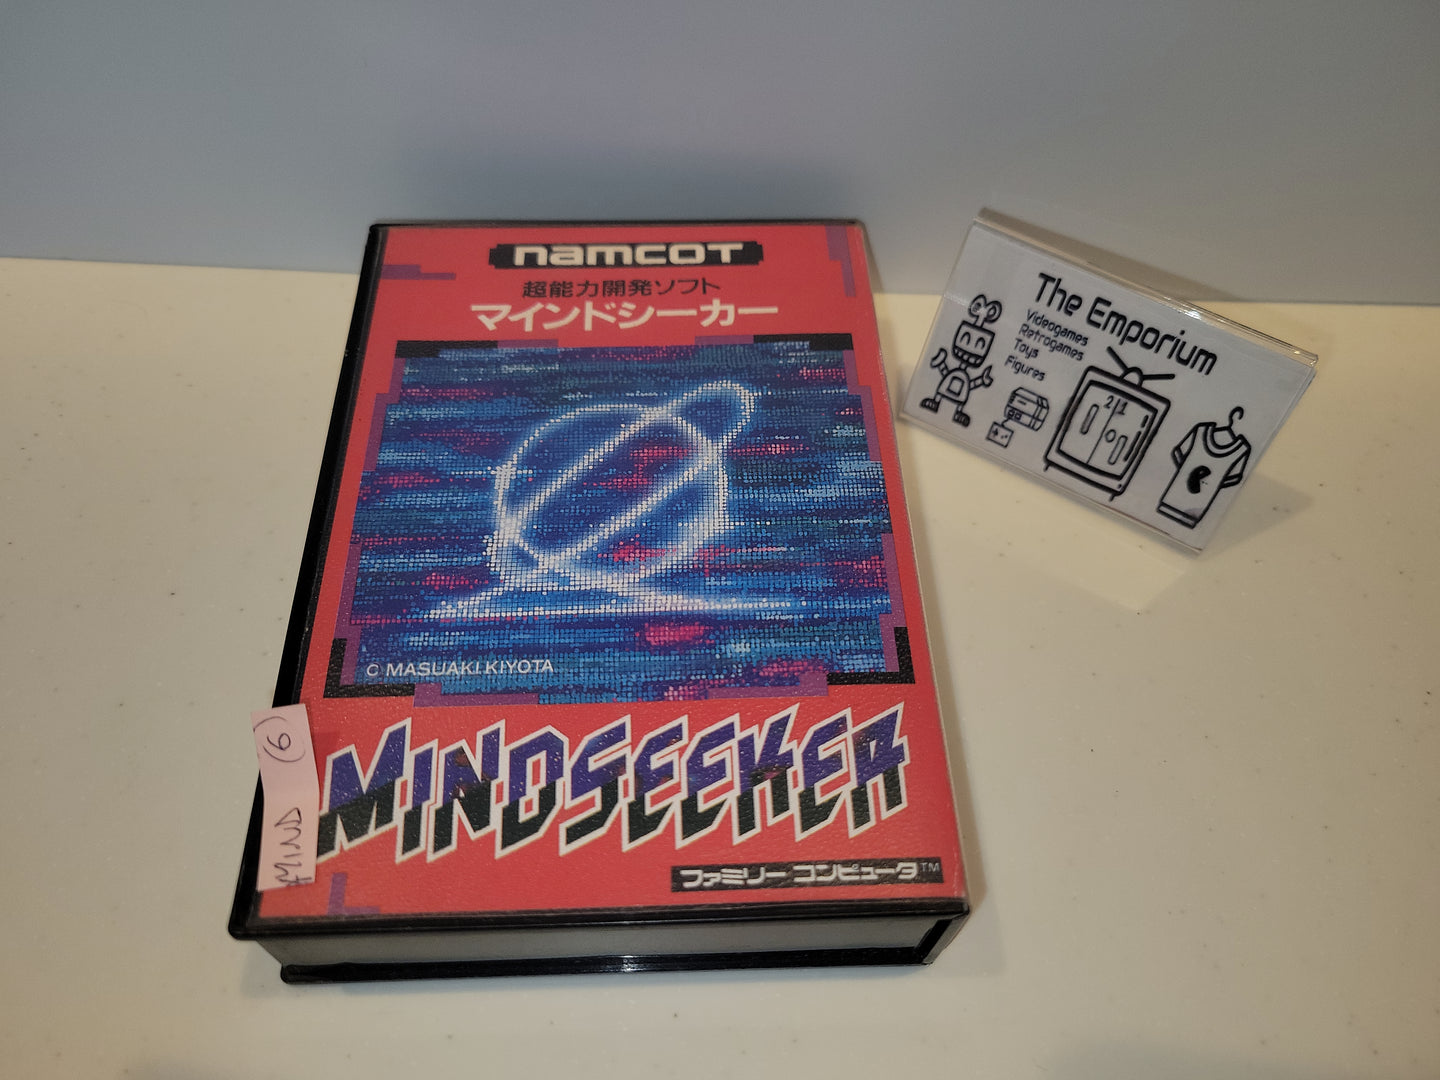 Mindseeker - Nintendo Fc Famicom